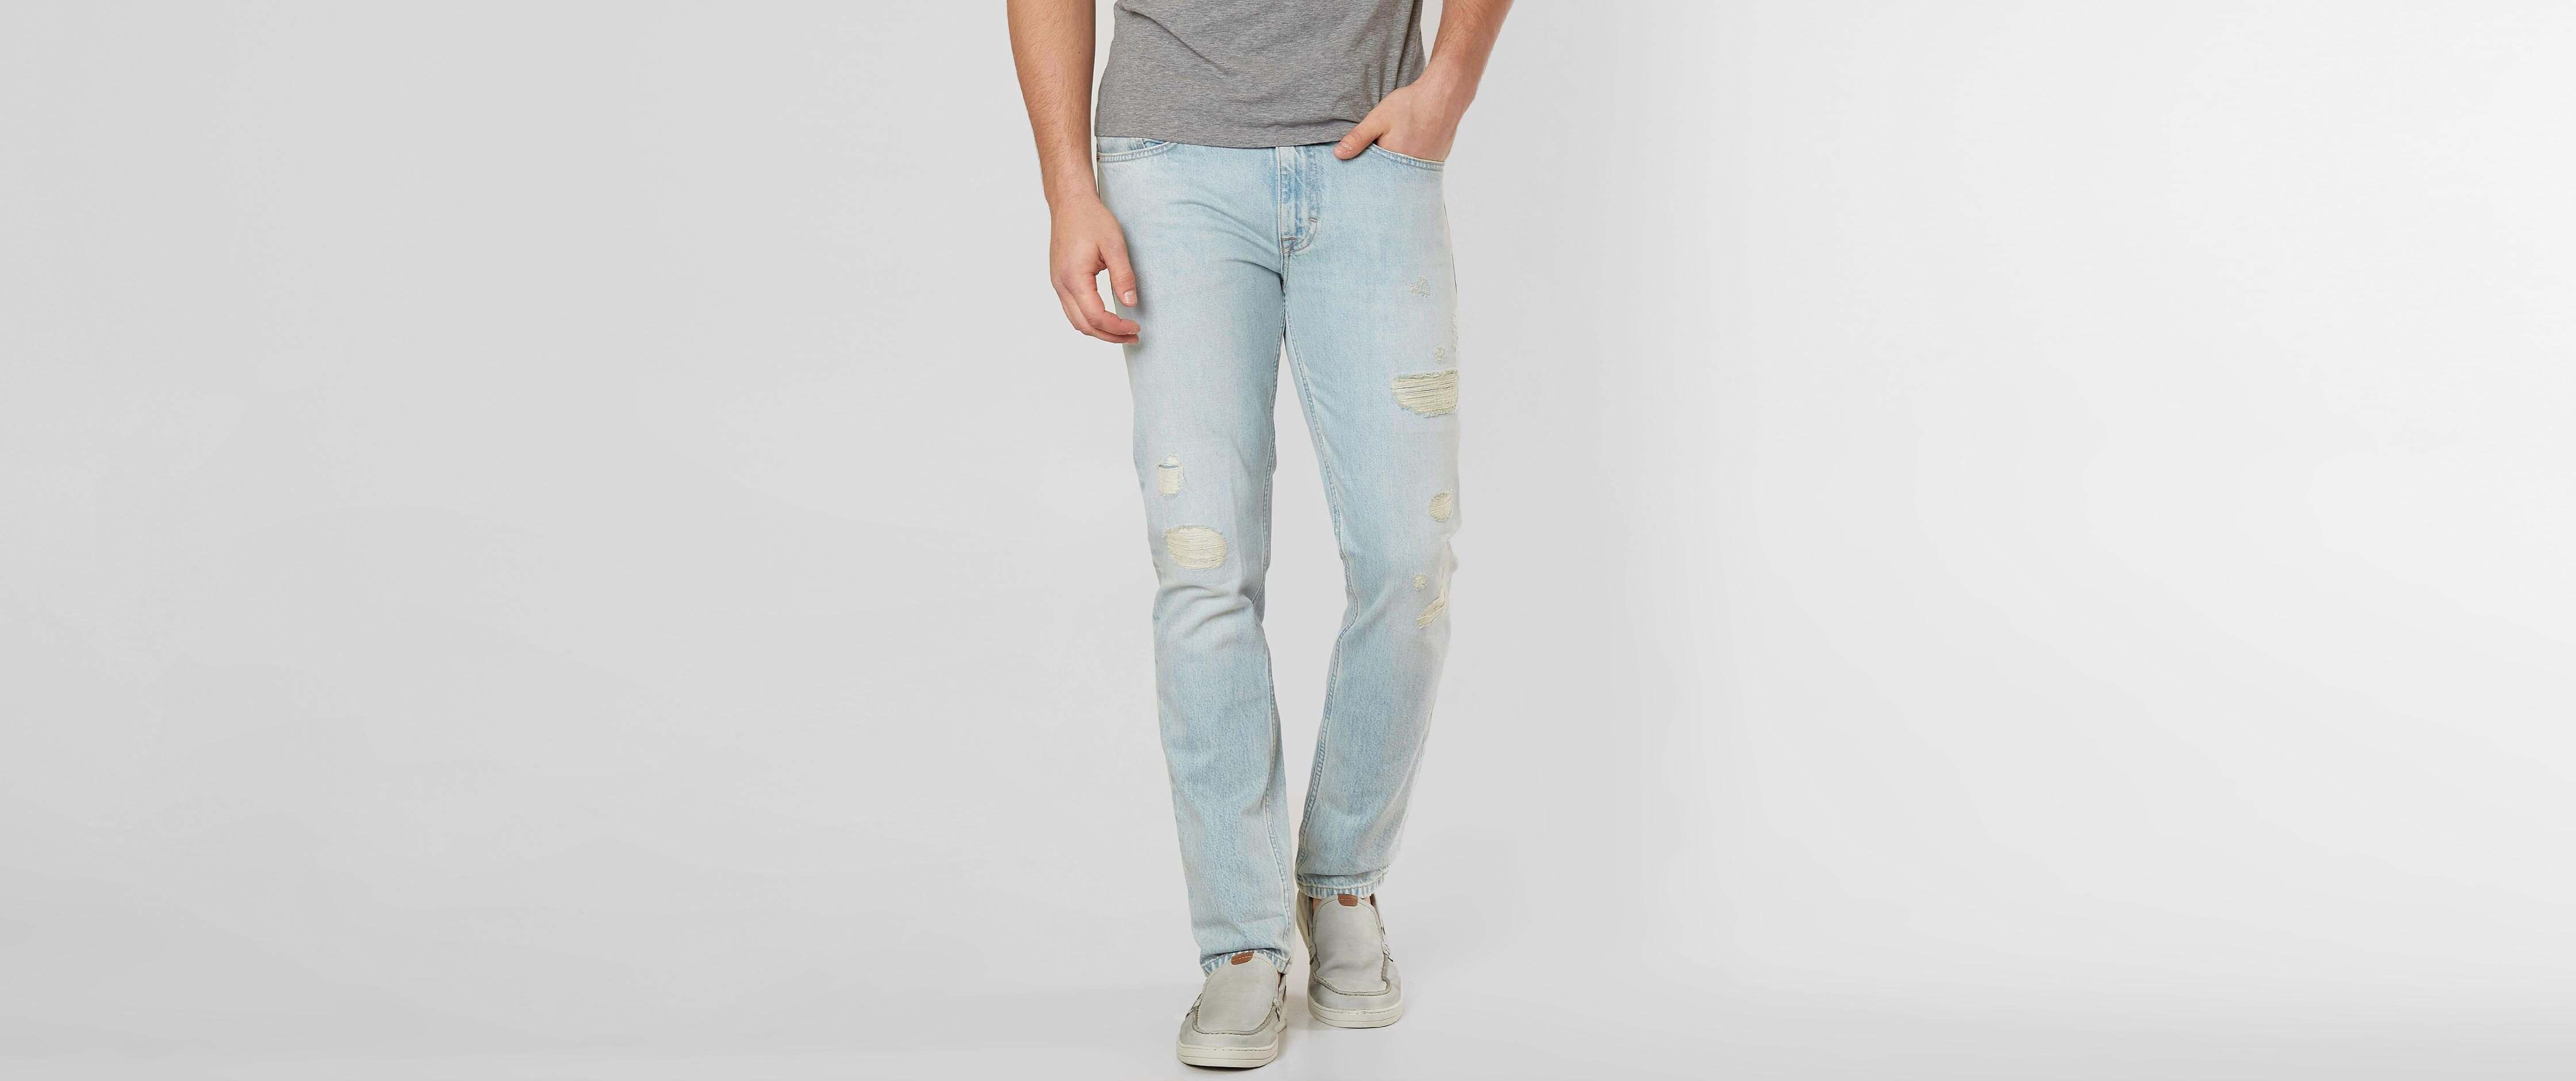 calvin klein men's slim straight jeans